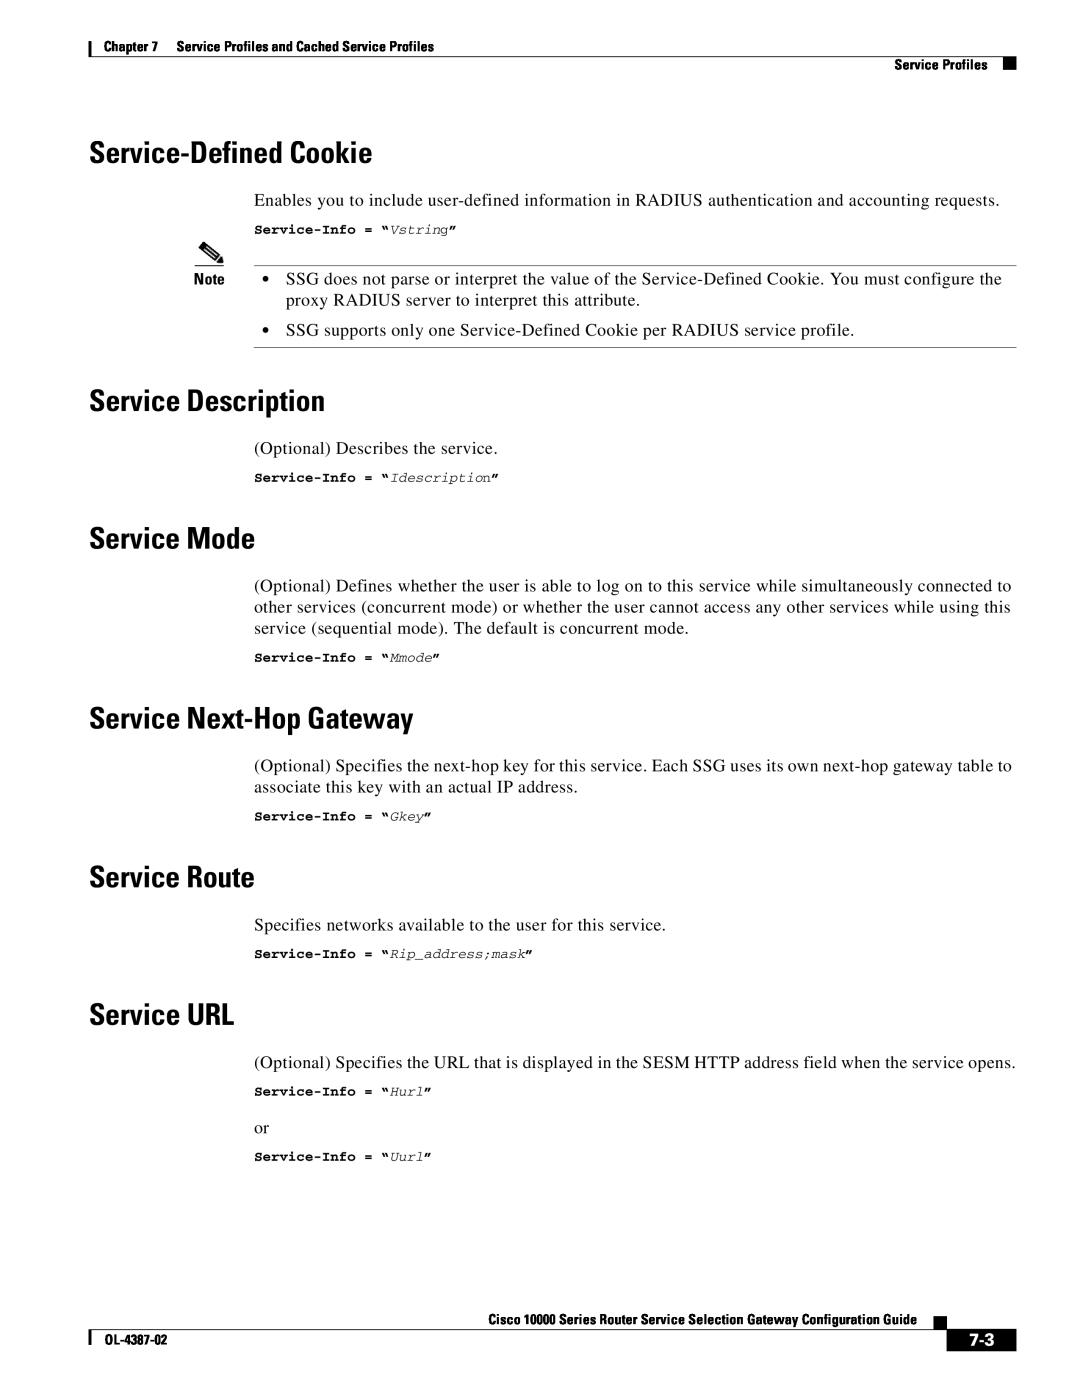 Cisco Systems OL-4387-02 Service-Defined Cookie, Service Description, Service Mode, Service Next-Hop Gateway, Service URL 